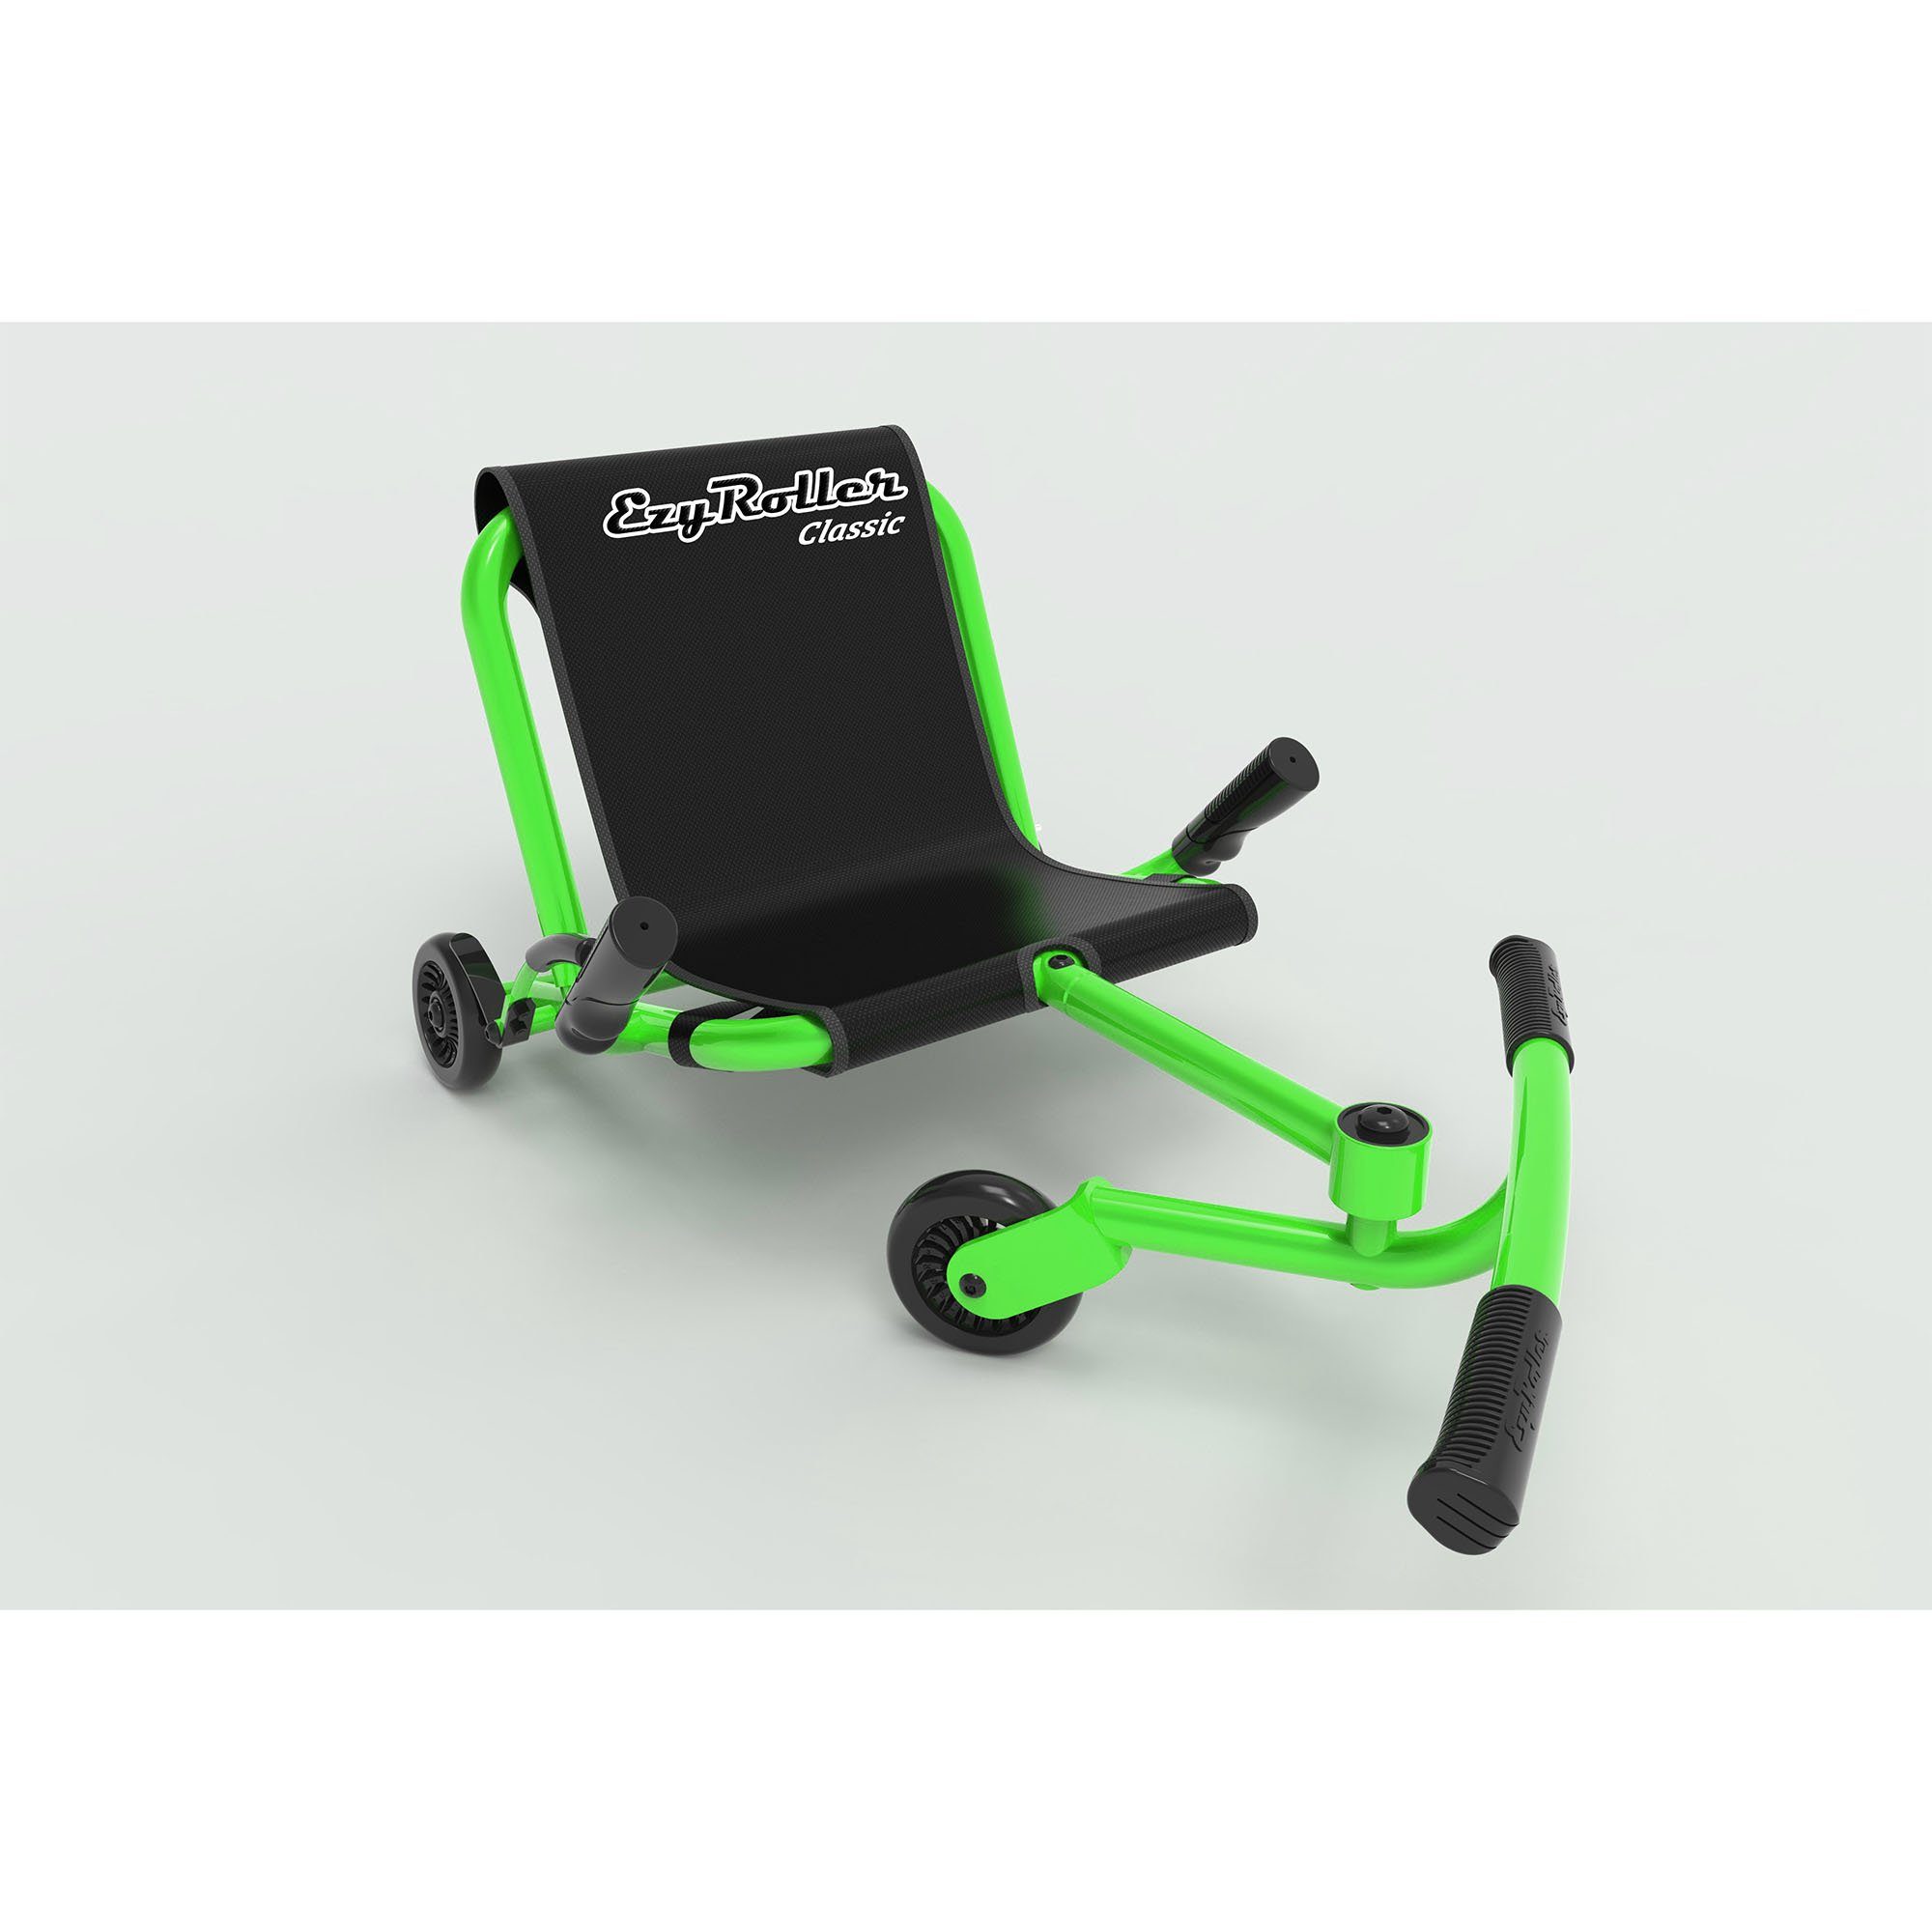 EzyRoller Dreiradscooter Classic, Kinderfahrzeug für Kinder ab 4 bis 14 Jahre Dreirad Trike Funfahrzeug grün